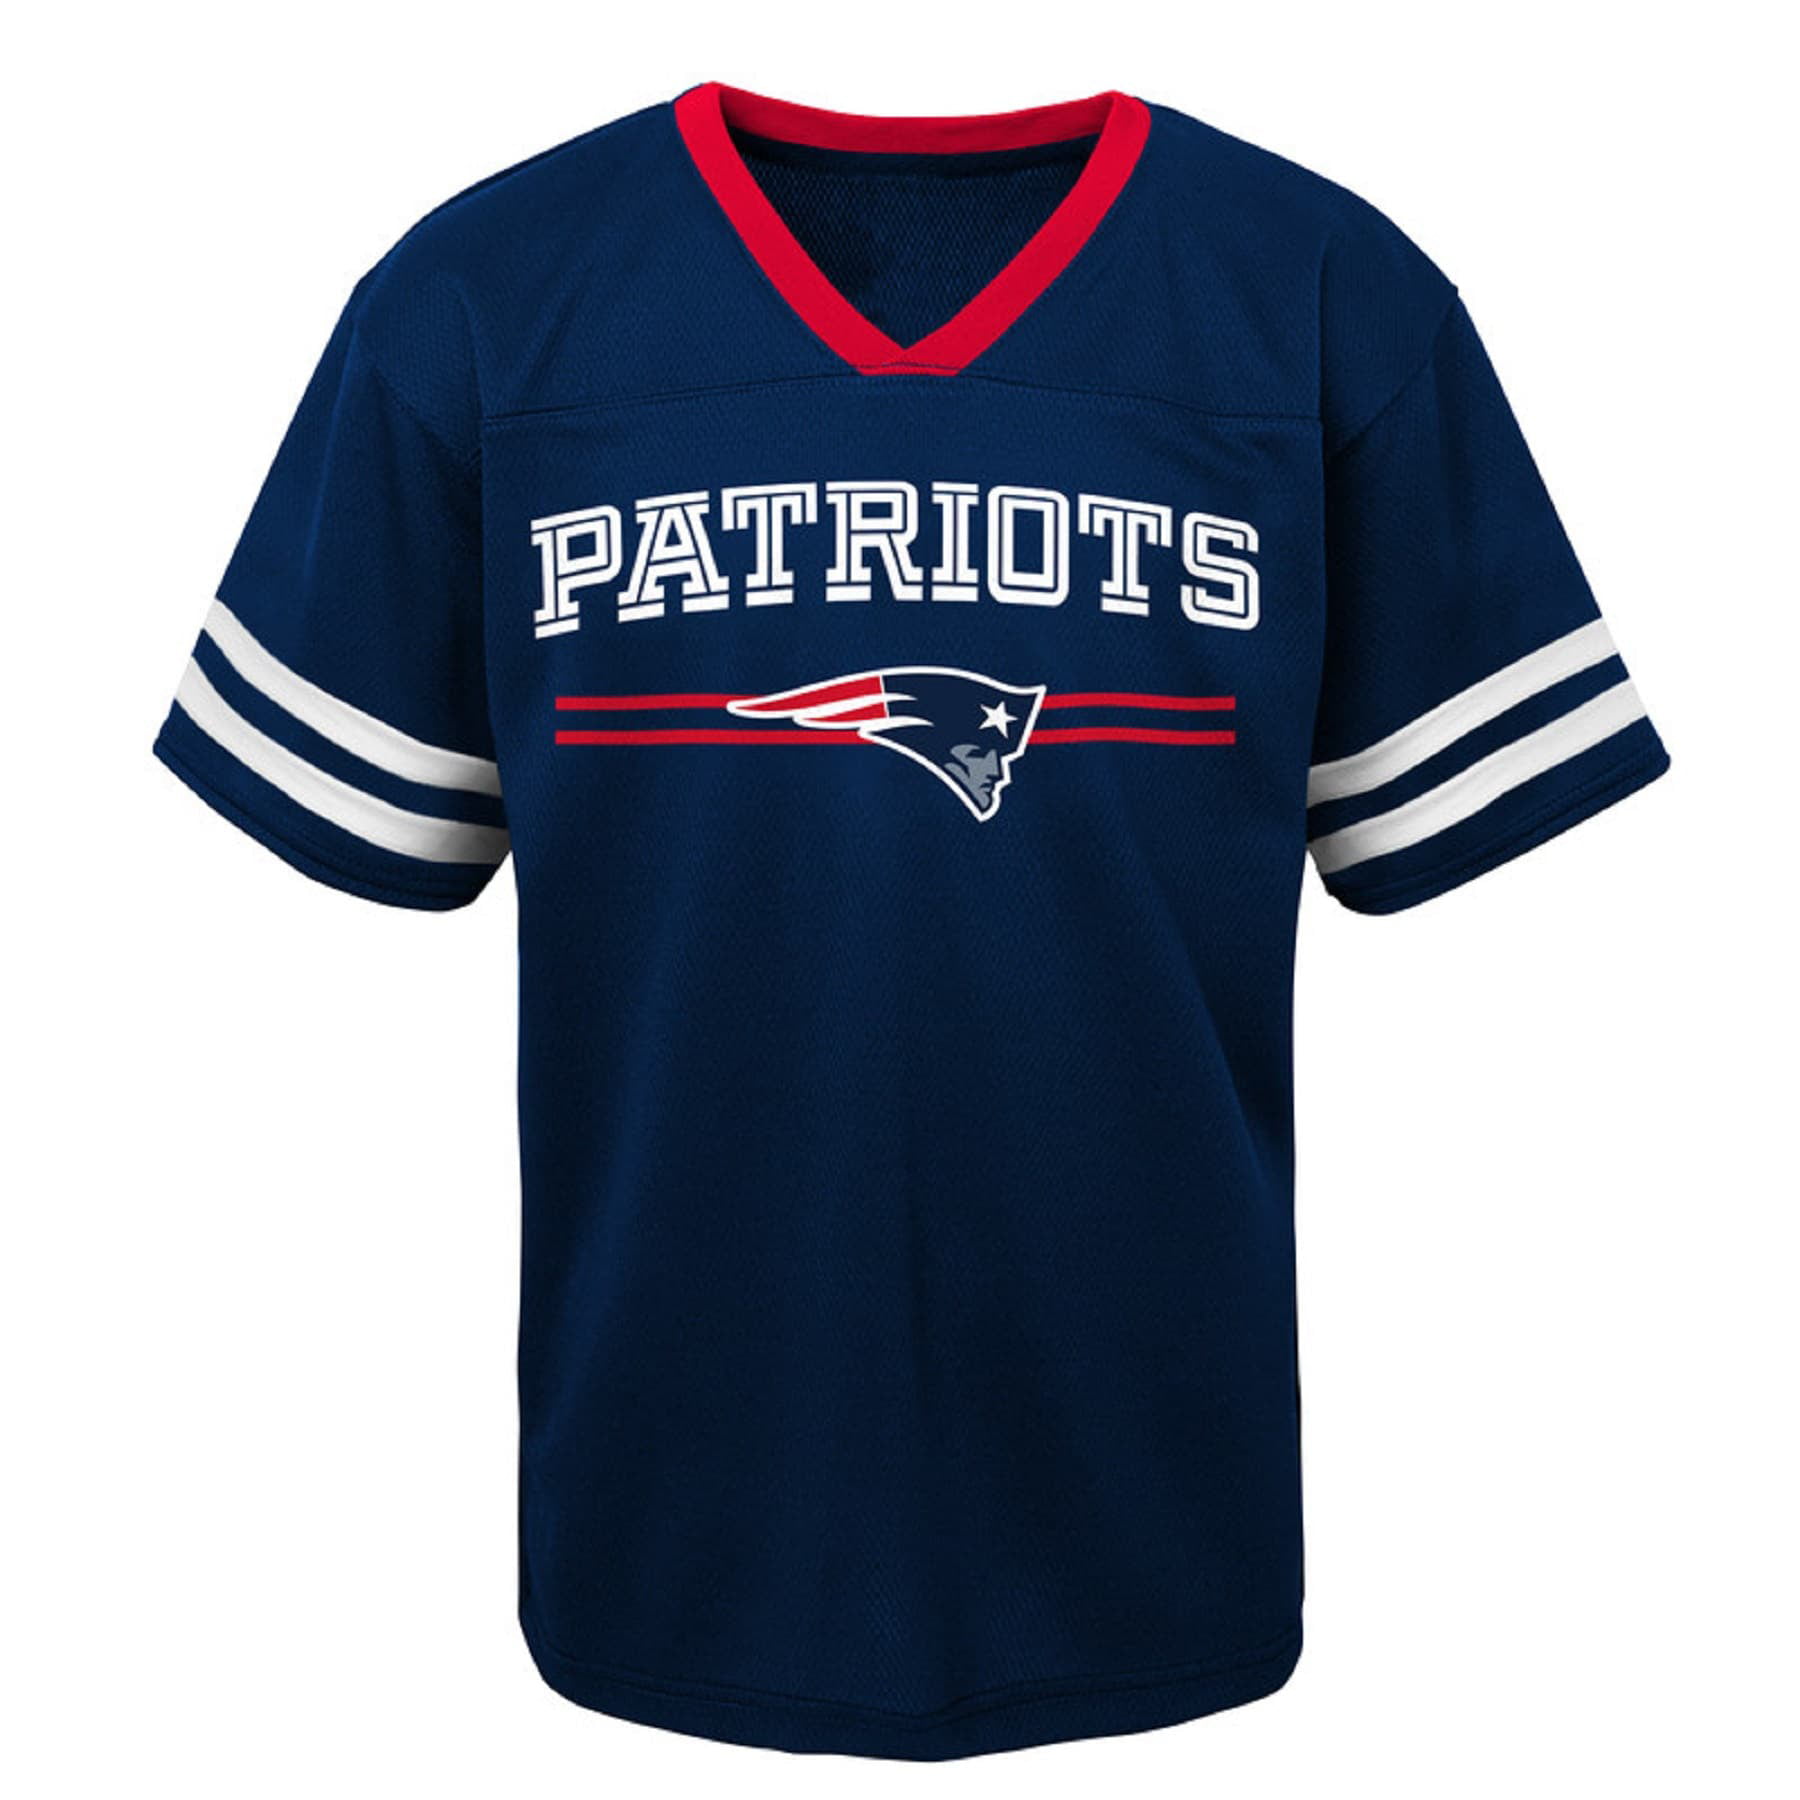 3t patriots jersey